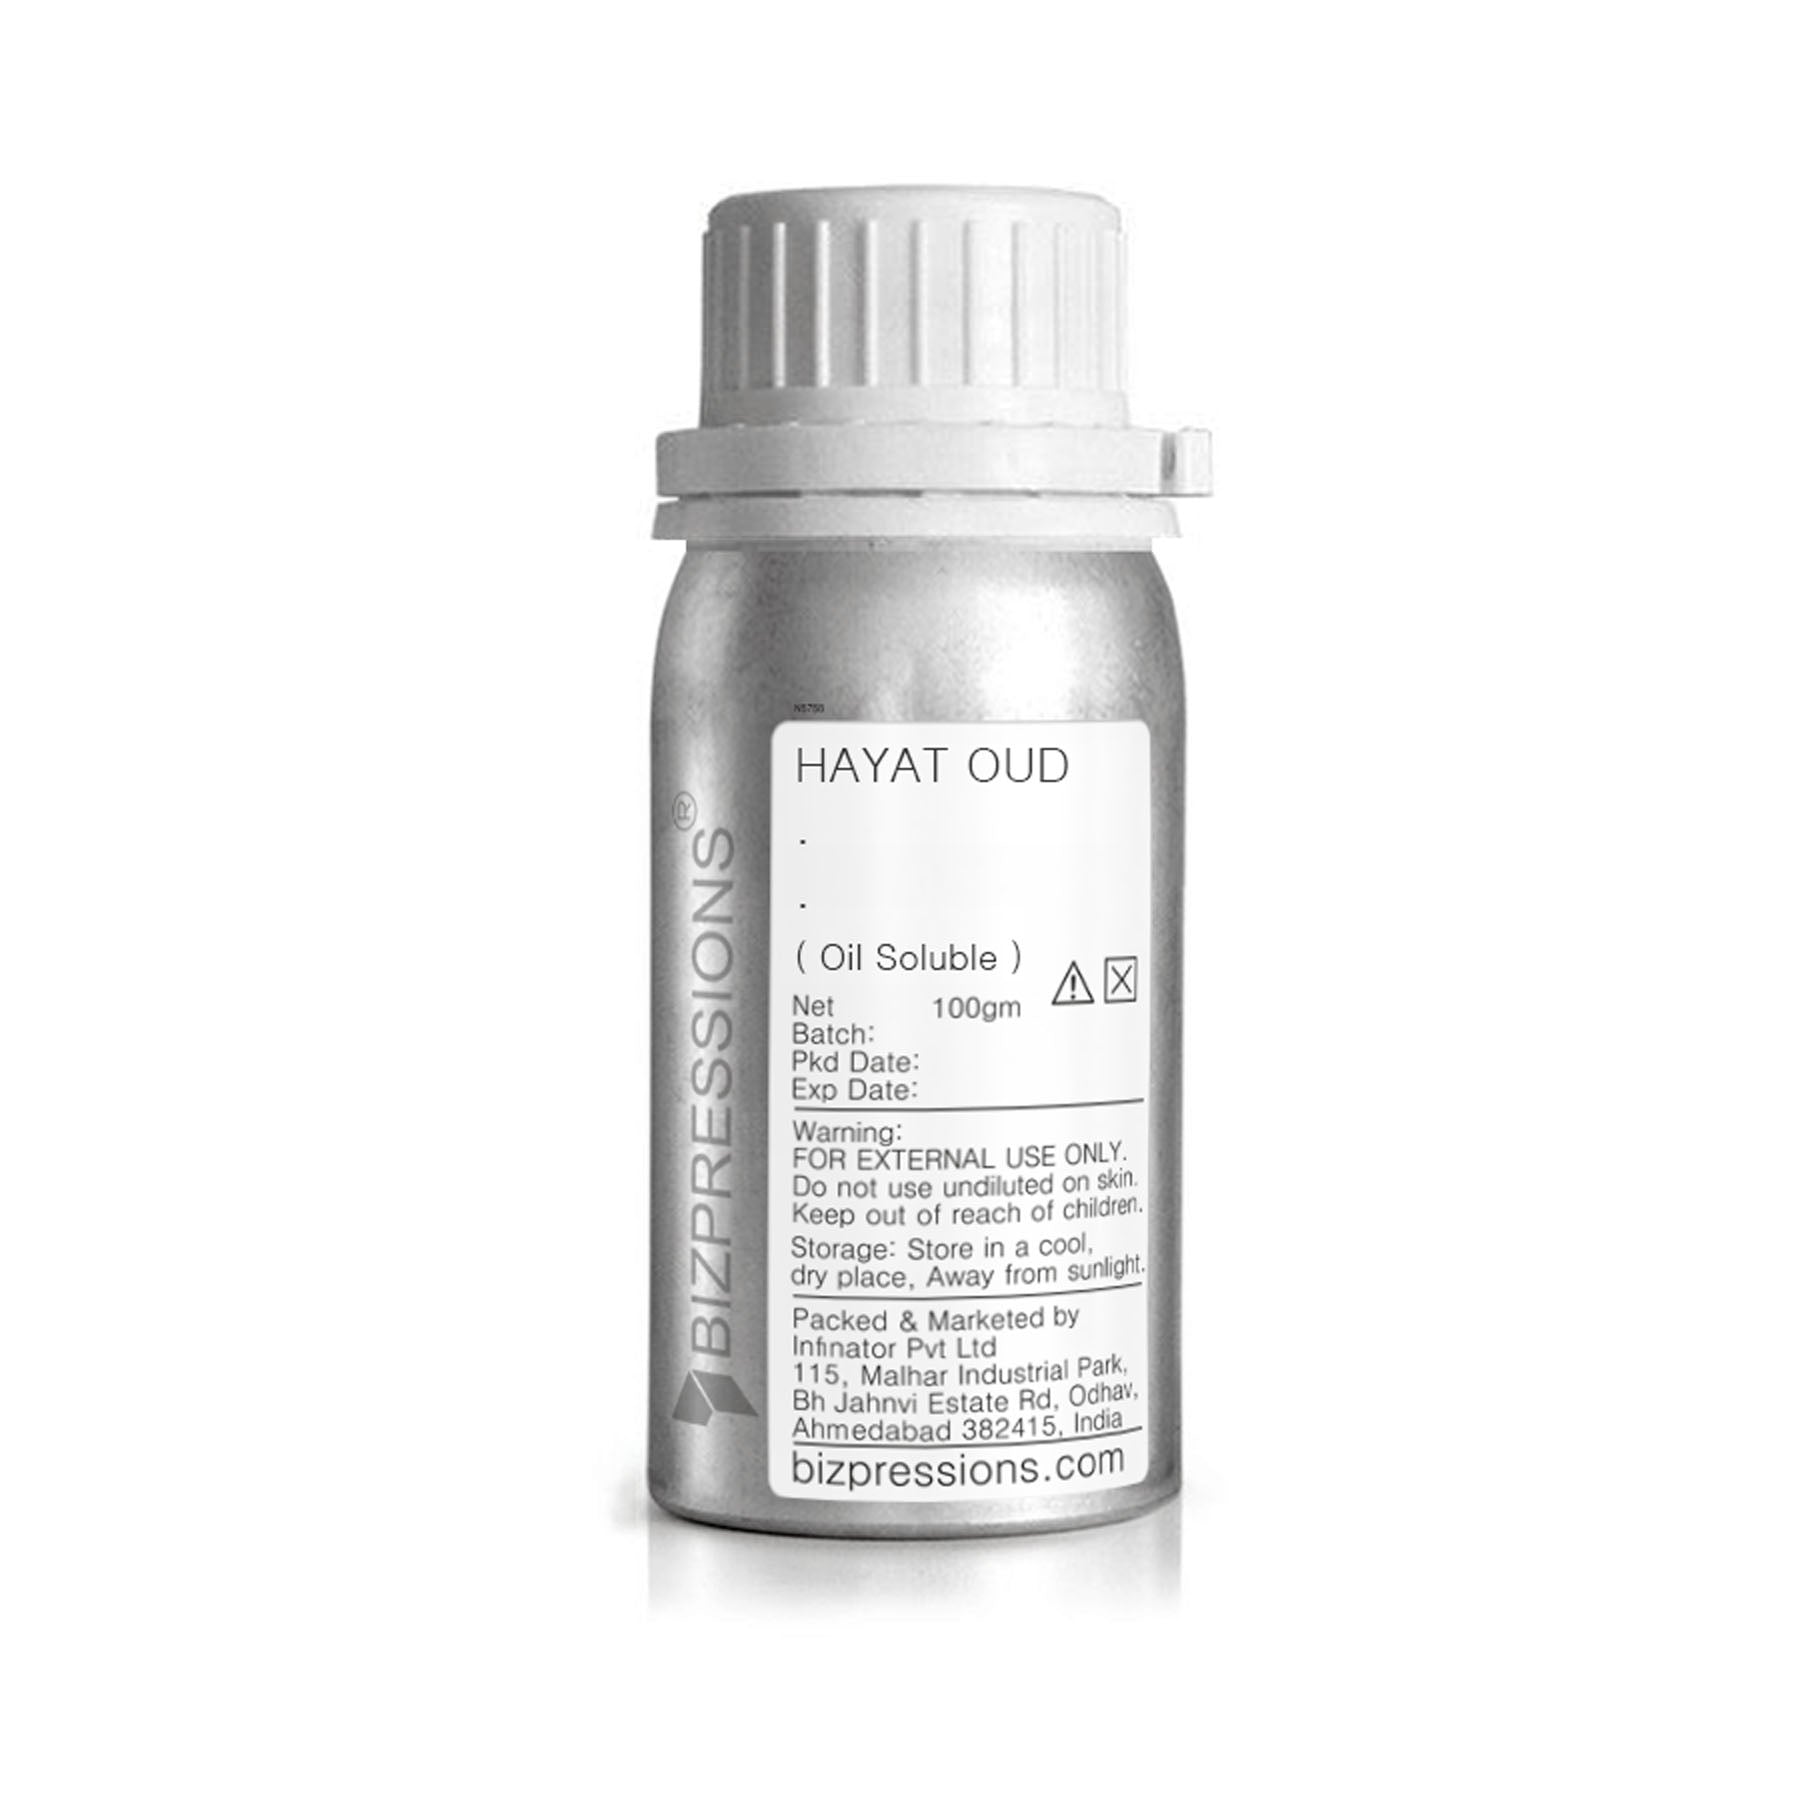 HAYAT OUD - Fragrance ( Oil Soluble ) - 100 gm